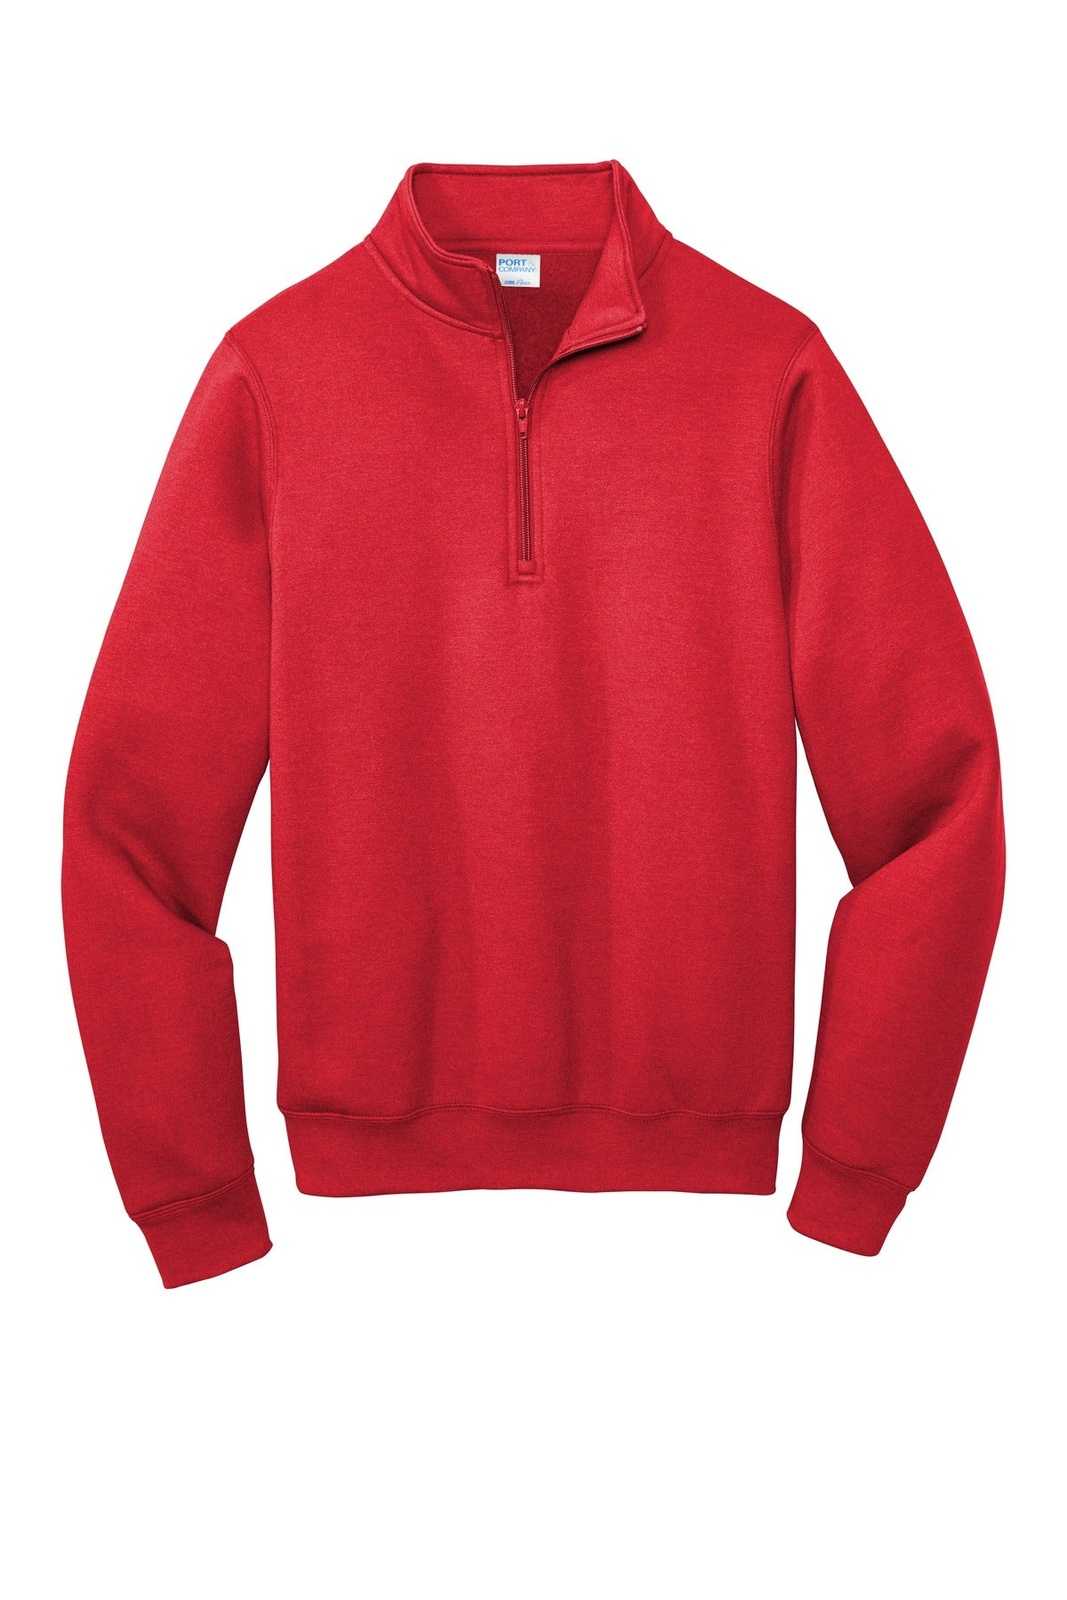 Port &amp; Company PC78Q Core Fleece 1/4-Zip Pullover Sweatshirt - Red - HIT a Double - 5